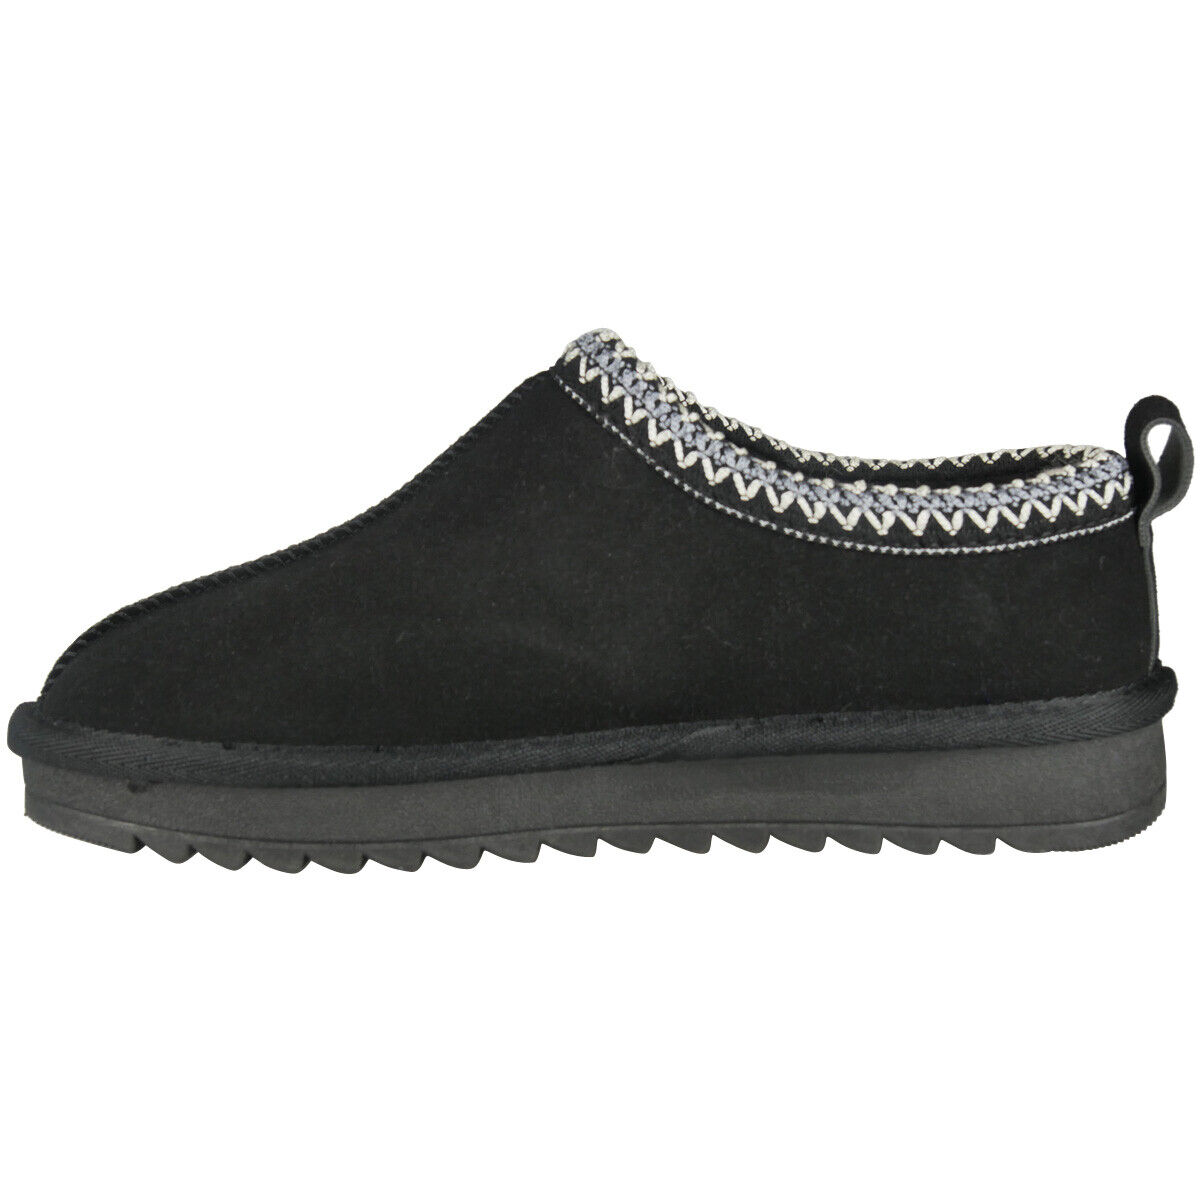 MANALIYA New Black Slippers Warm Faux Fur Boots